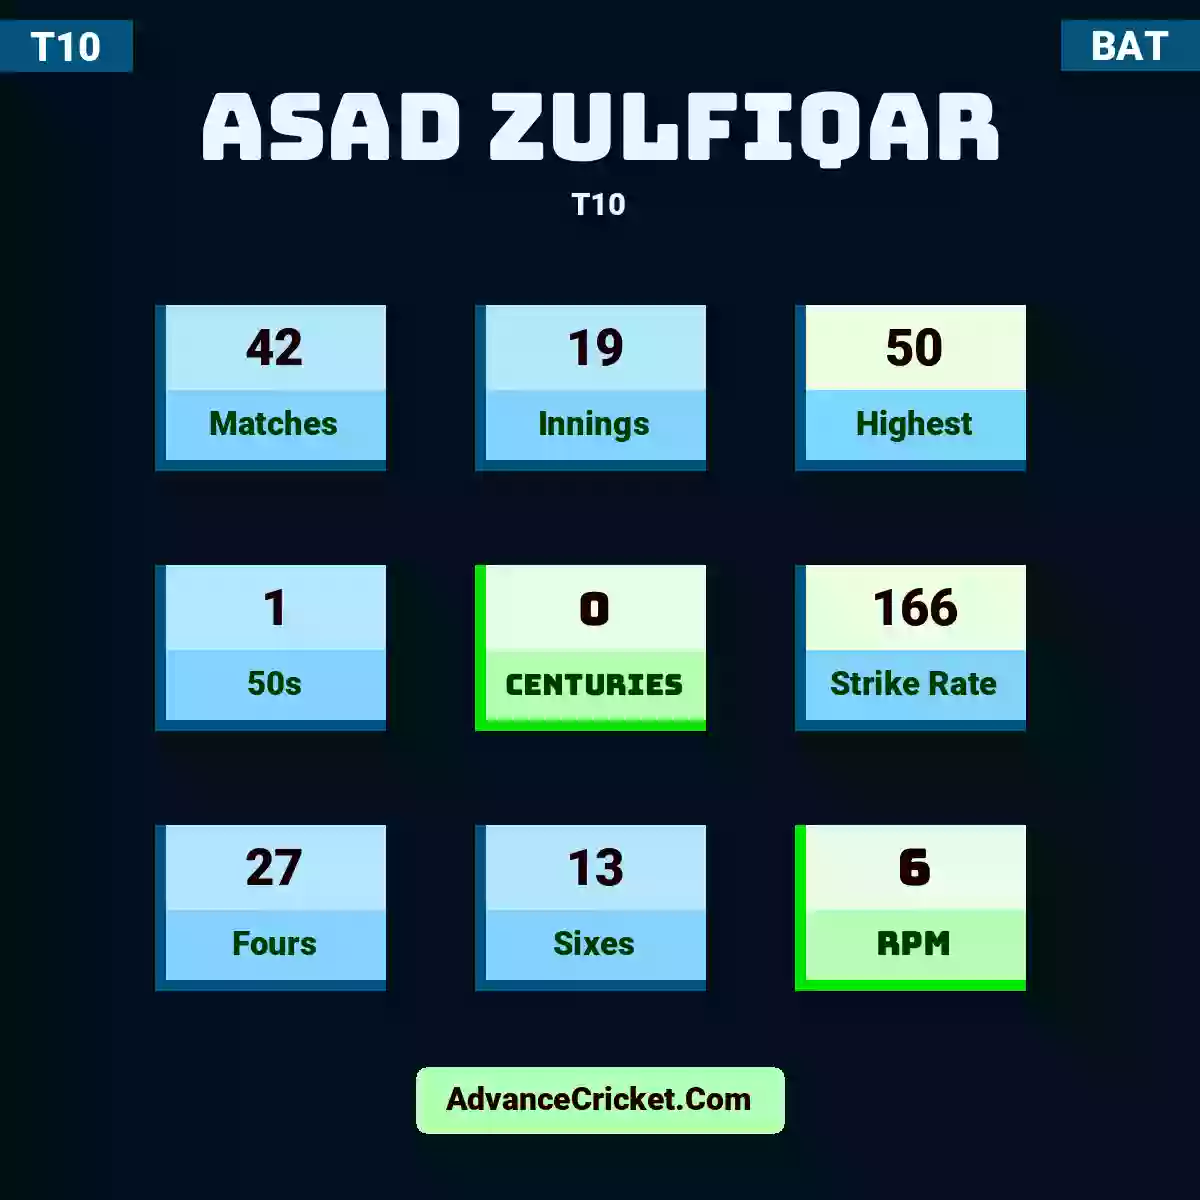 Asad Zulfiqar T10 , Asad Zulfiqar played 42 matches, scored 50 runs as highest, 1 half-centuries, and 0 centuries, with a strike rate of 166. A.Zulfiqar hit 27 fours and 13 sixes, with an RPM of 6.